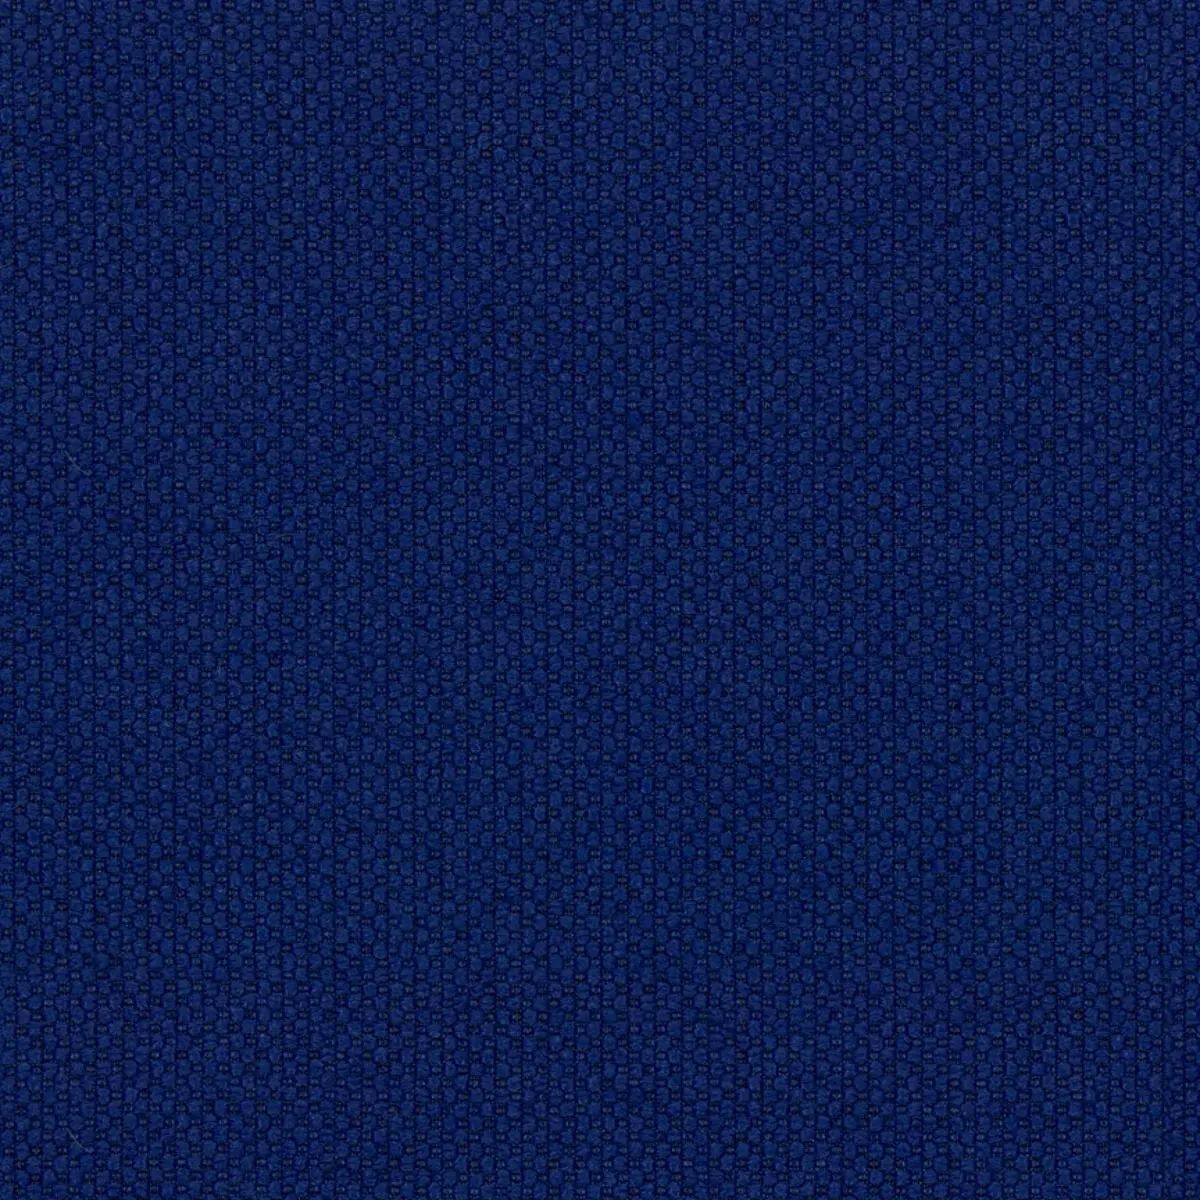 Fabric sample Merit 0007 blue